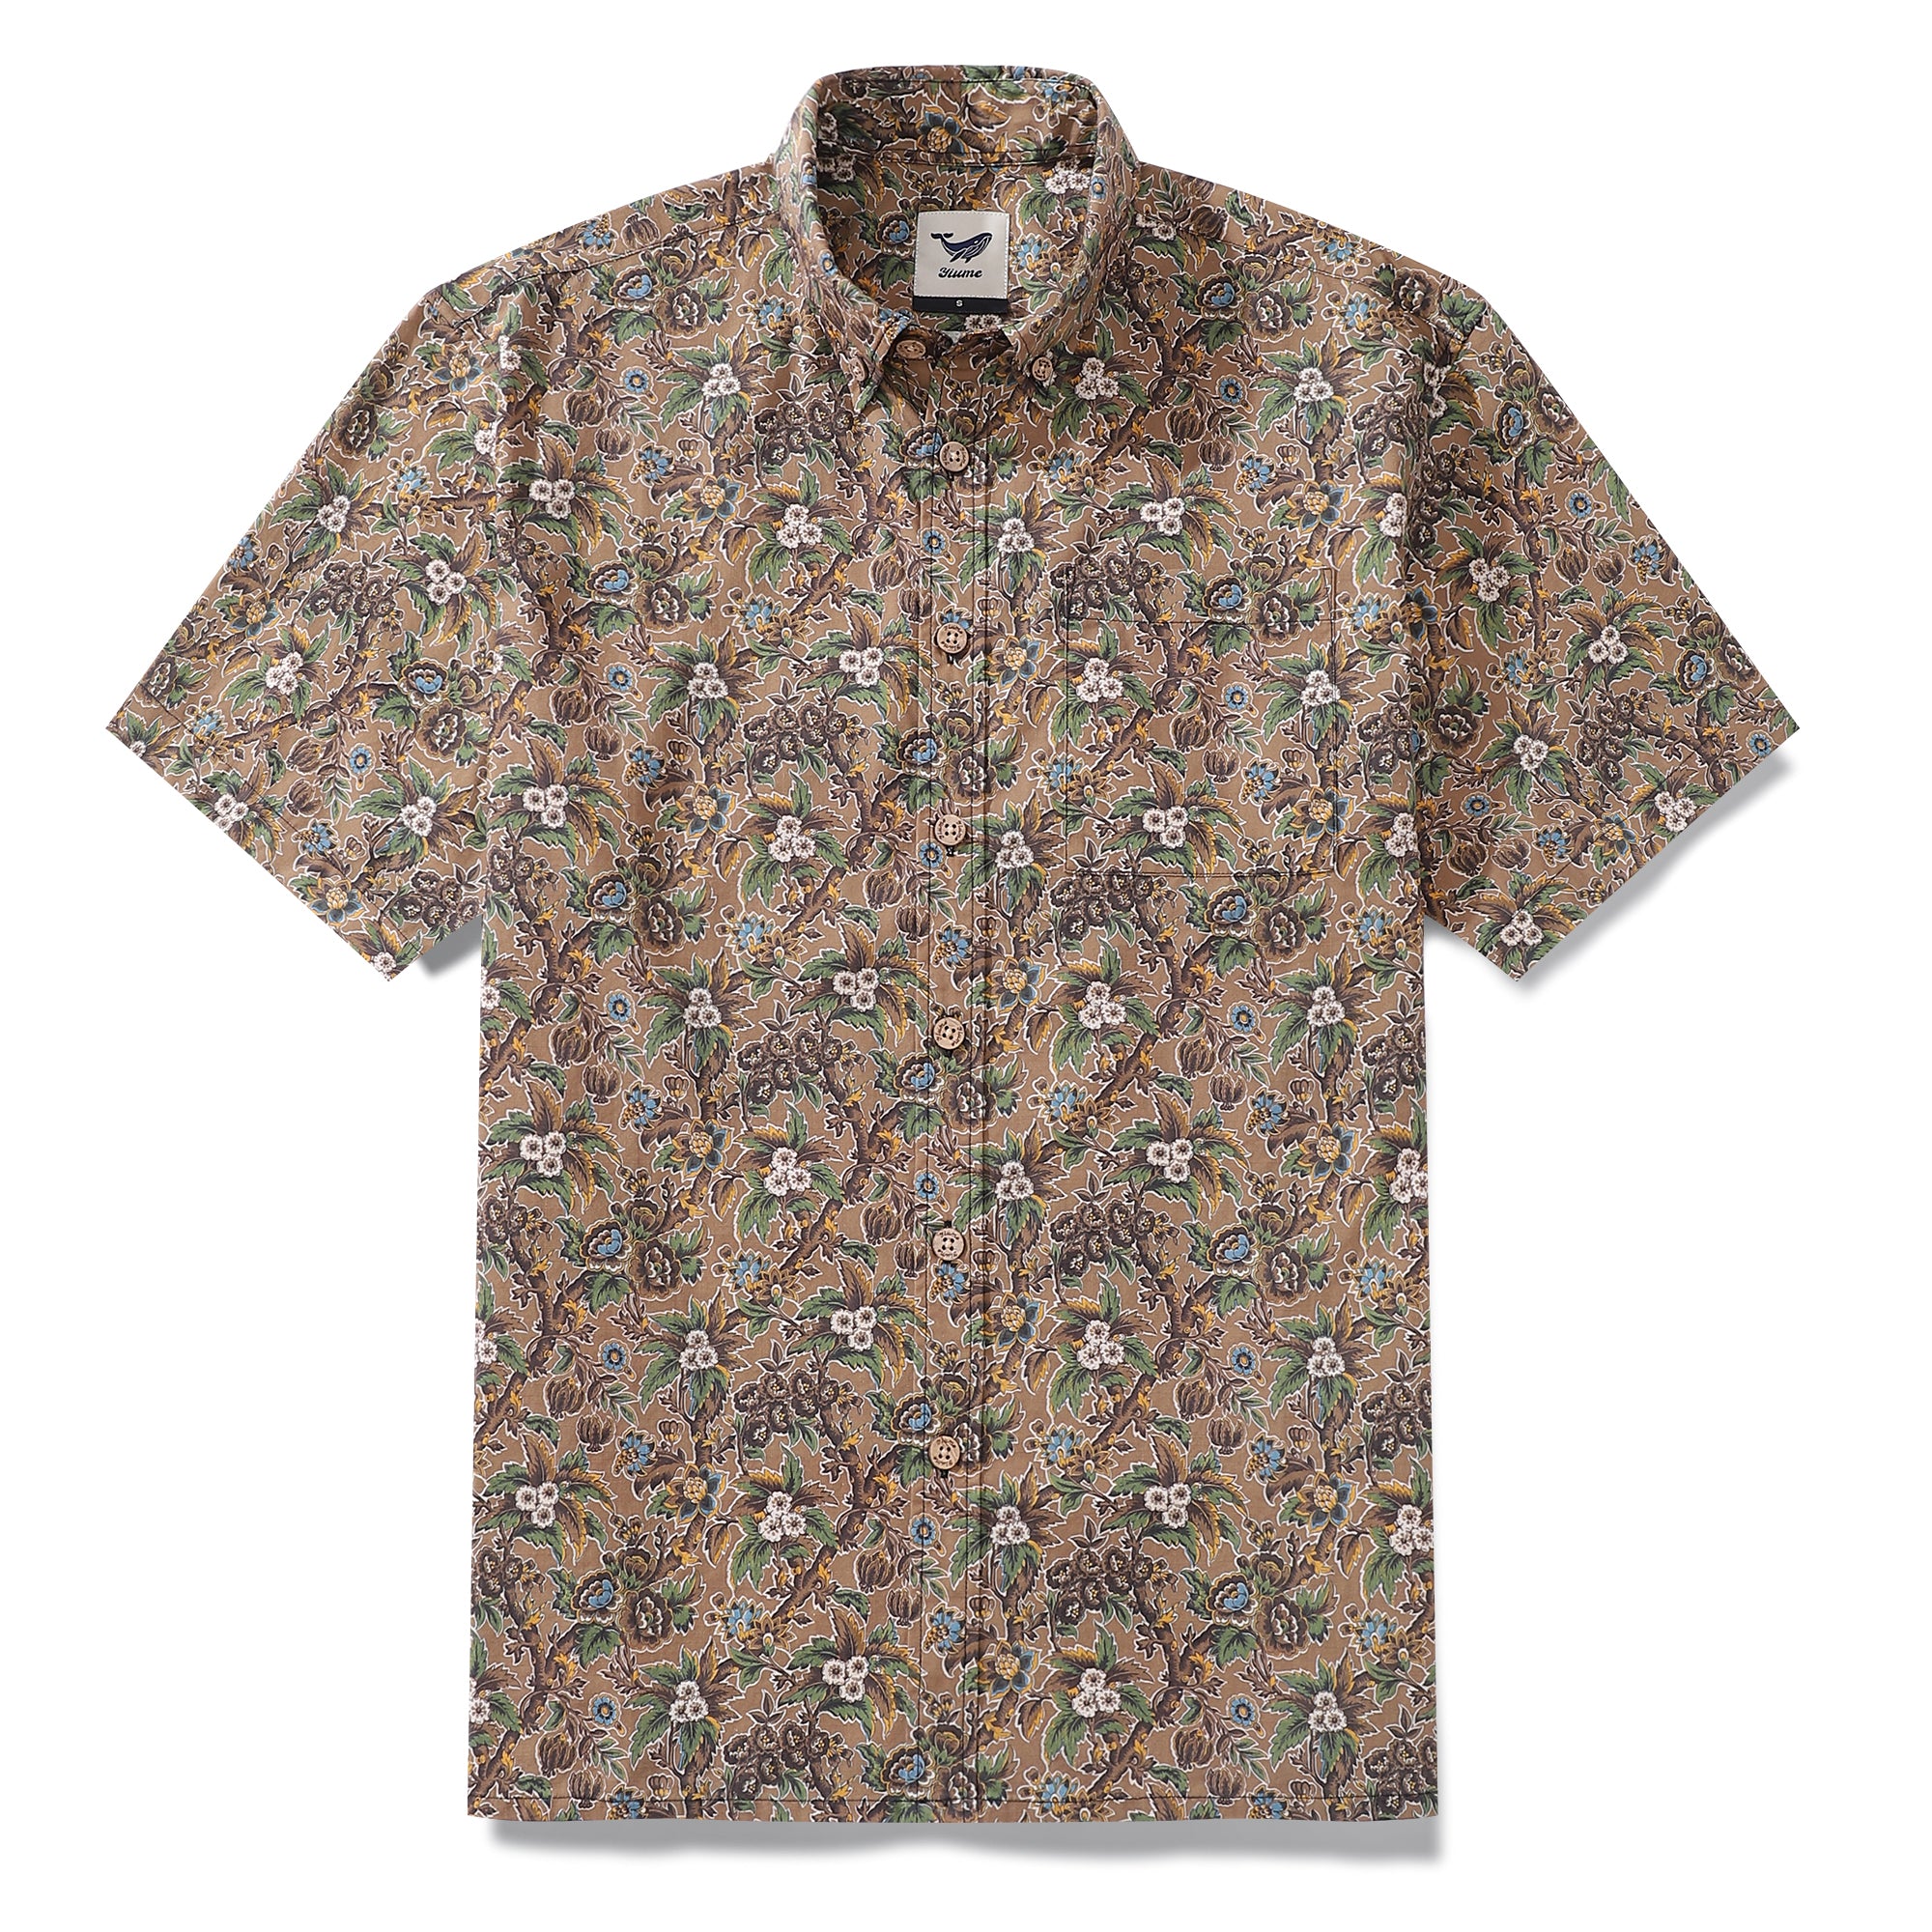 Men's Hawaiian Shirt Autumn Colors Print Cotton Button-down Short Sleeve Aloha Shirt